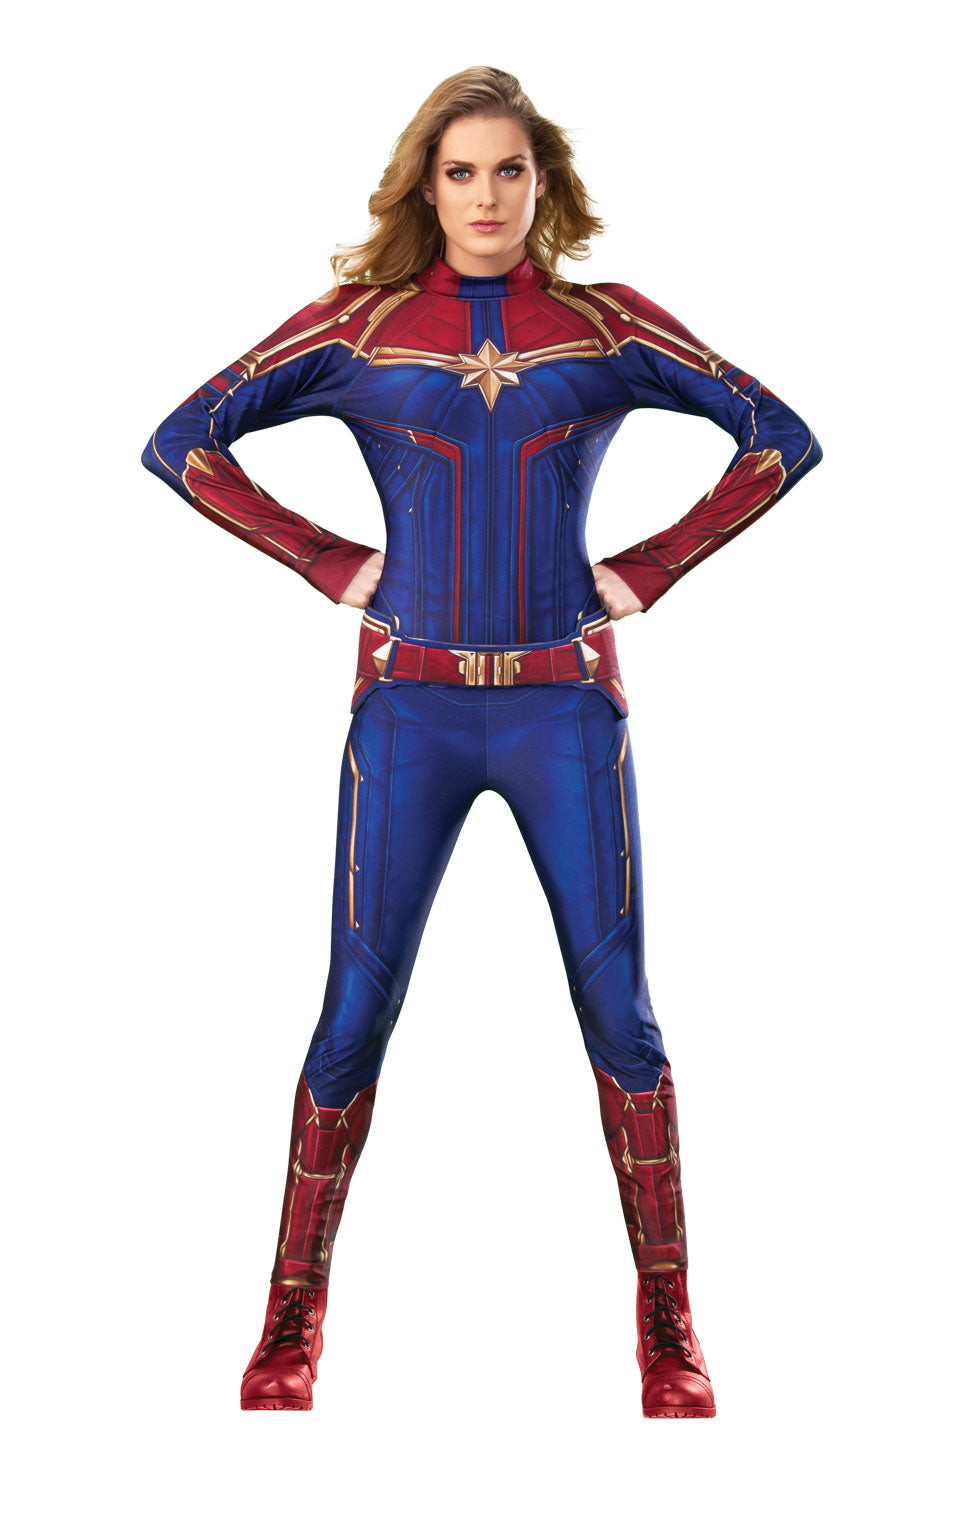 Captain Marvel costume adult superhero suit for women.